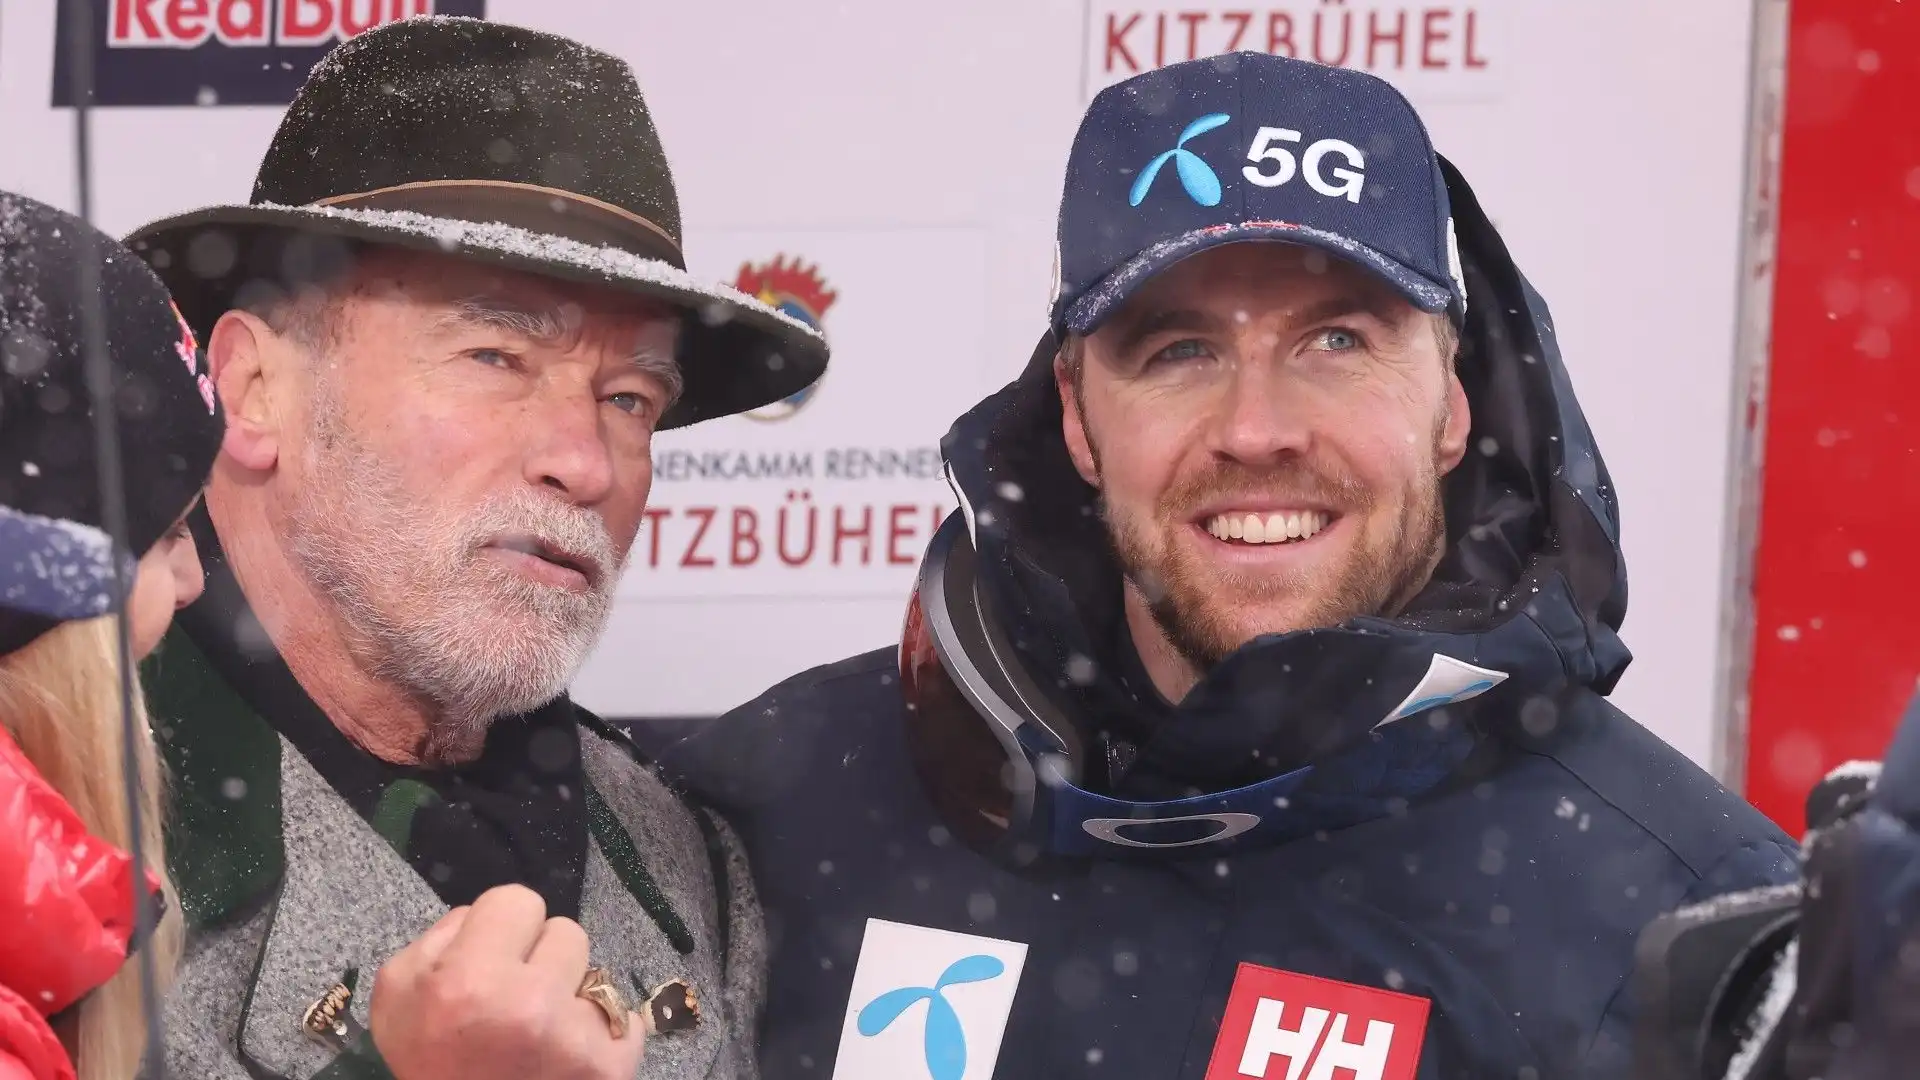 Arnold Schwarzenegger ha incontrato anche Aleksander Aamodt Kilde: eccoli insieme